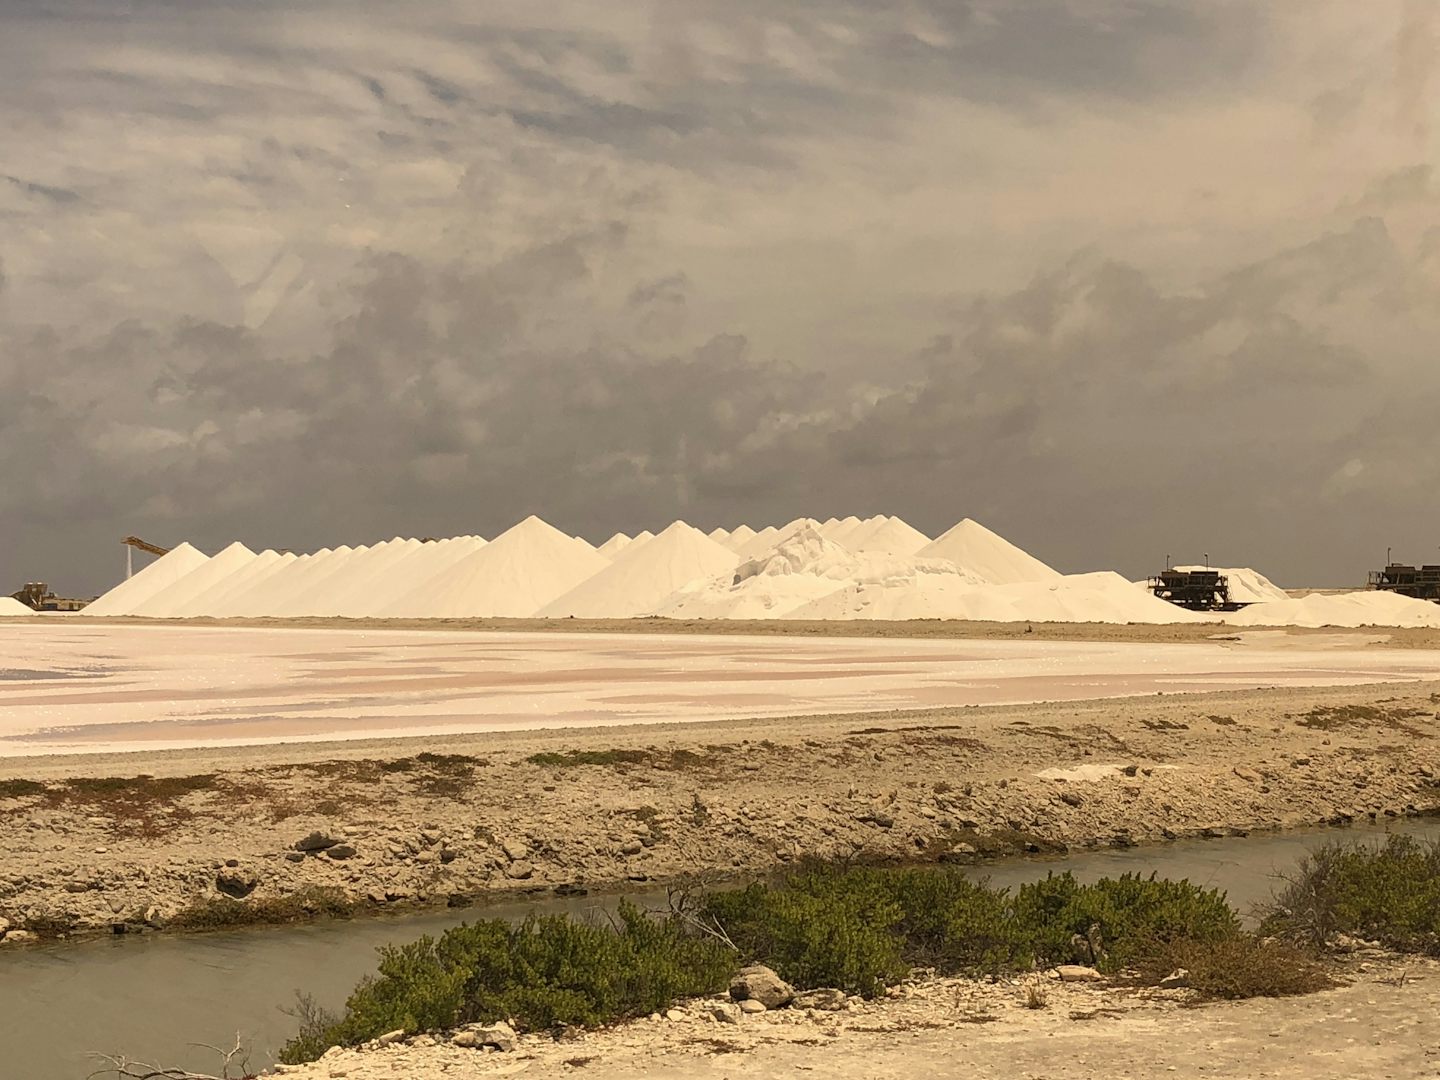 These salt piles on Bonaireare about 25 feet high.